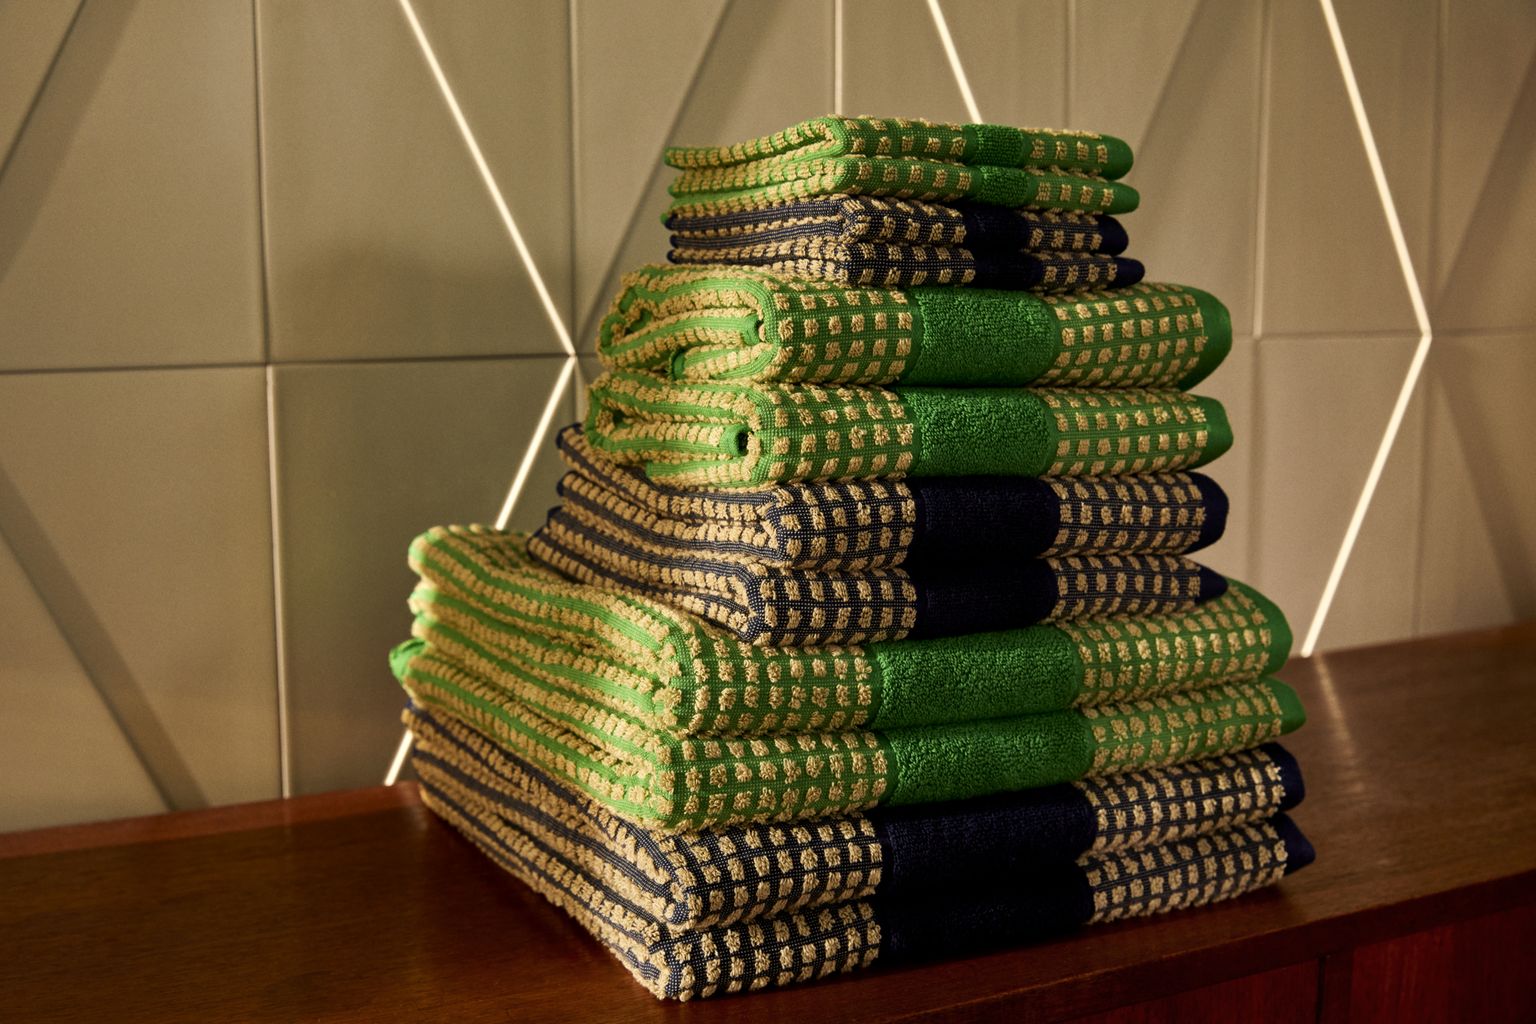 Juna Check Towel 70 X140 Cm, Green/Beige